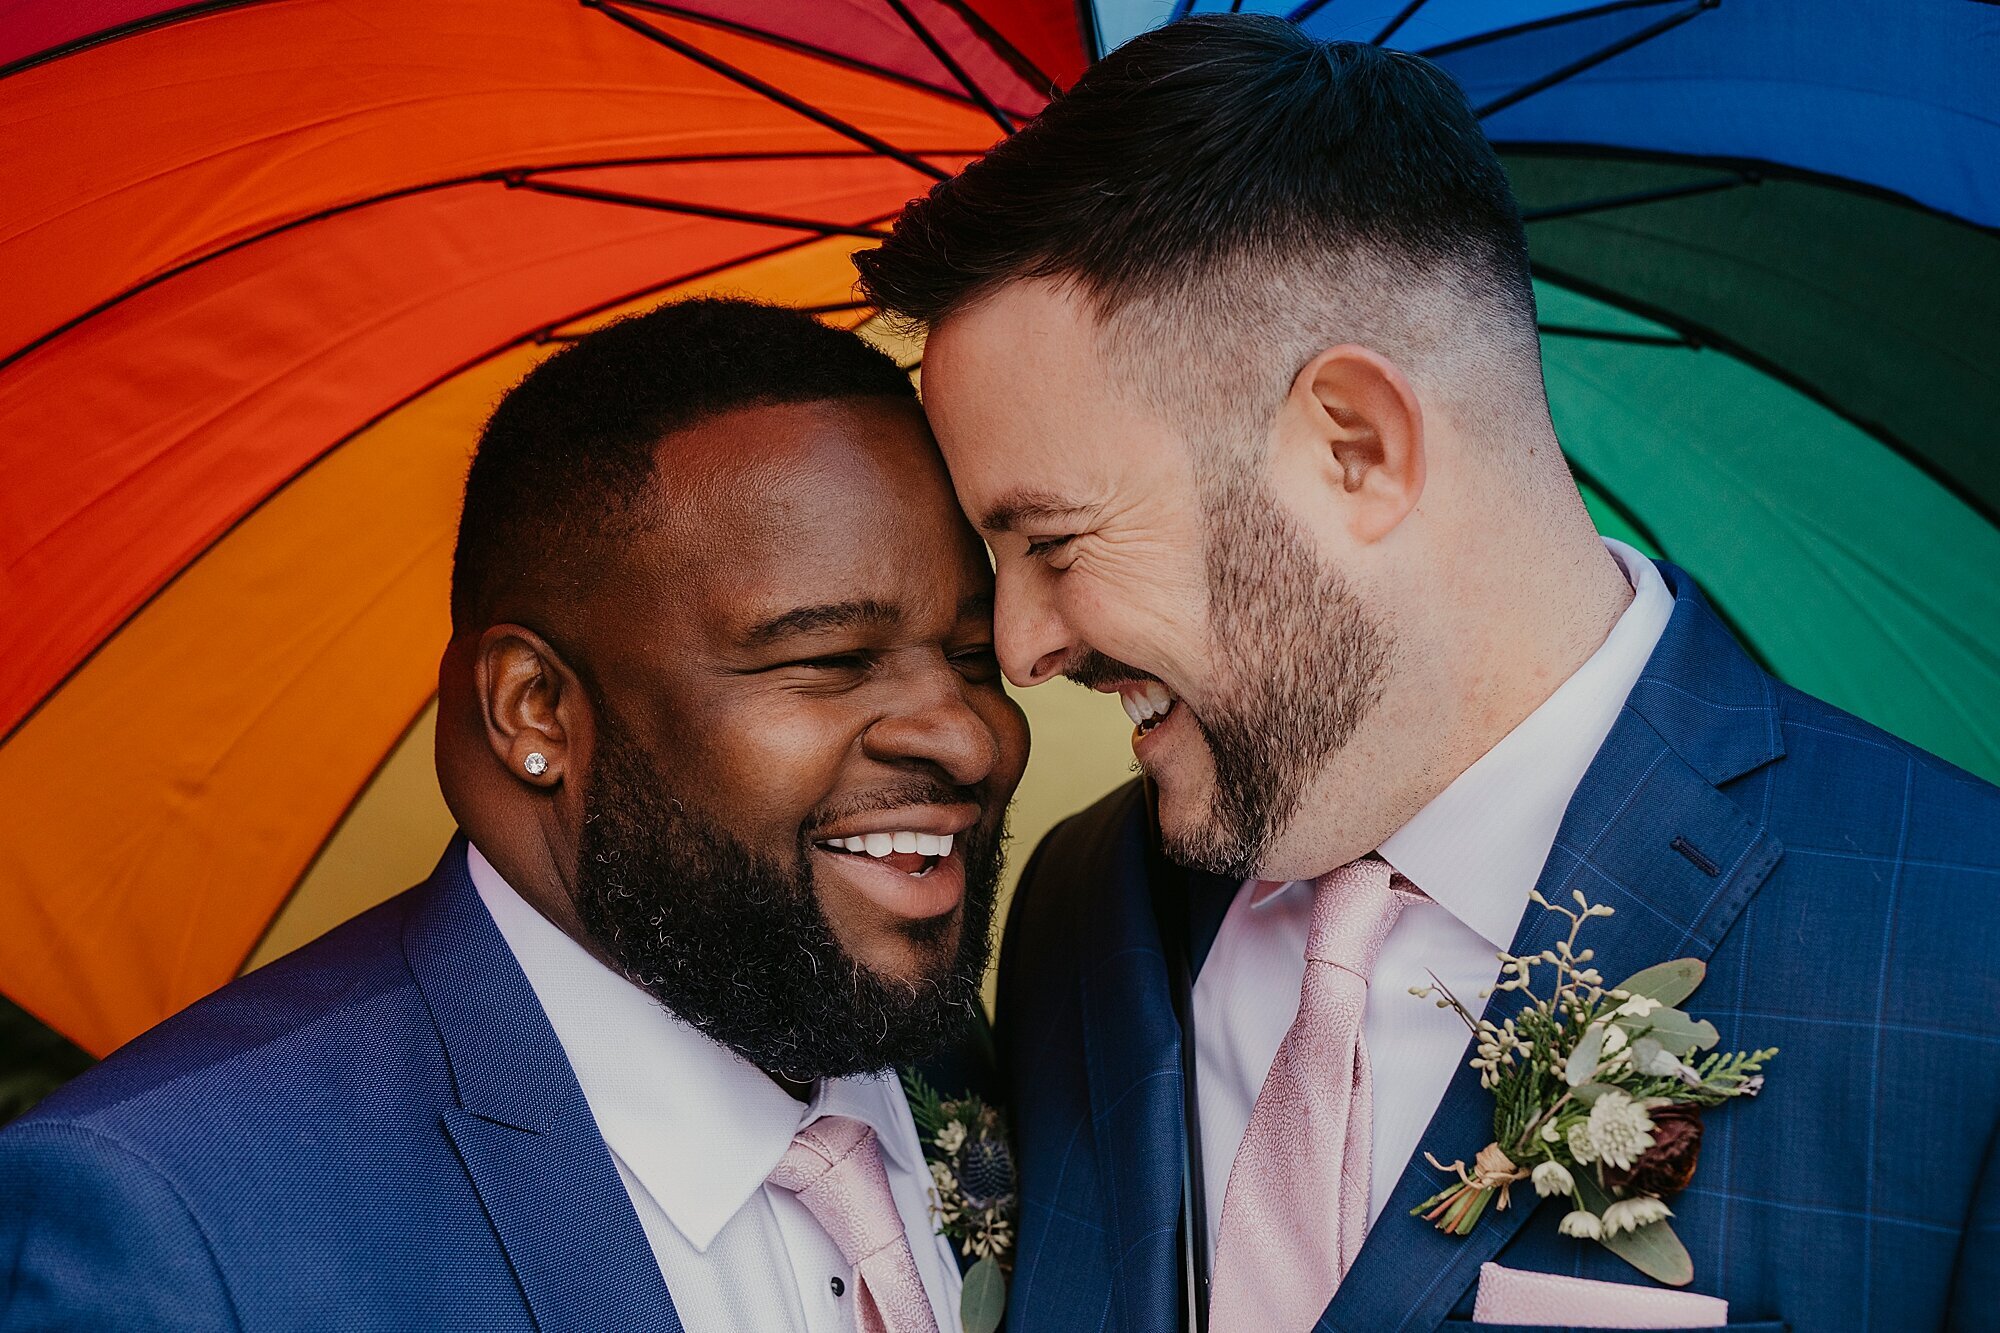 Love_by_Joe_mac_Levering_Mill_Tribute_House_Bala+Cynwyd_Gay_LGBT_Wedding_Photography_Philadelphia__0048.jpg